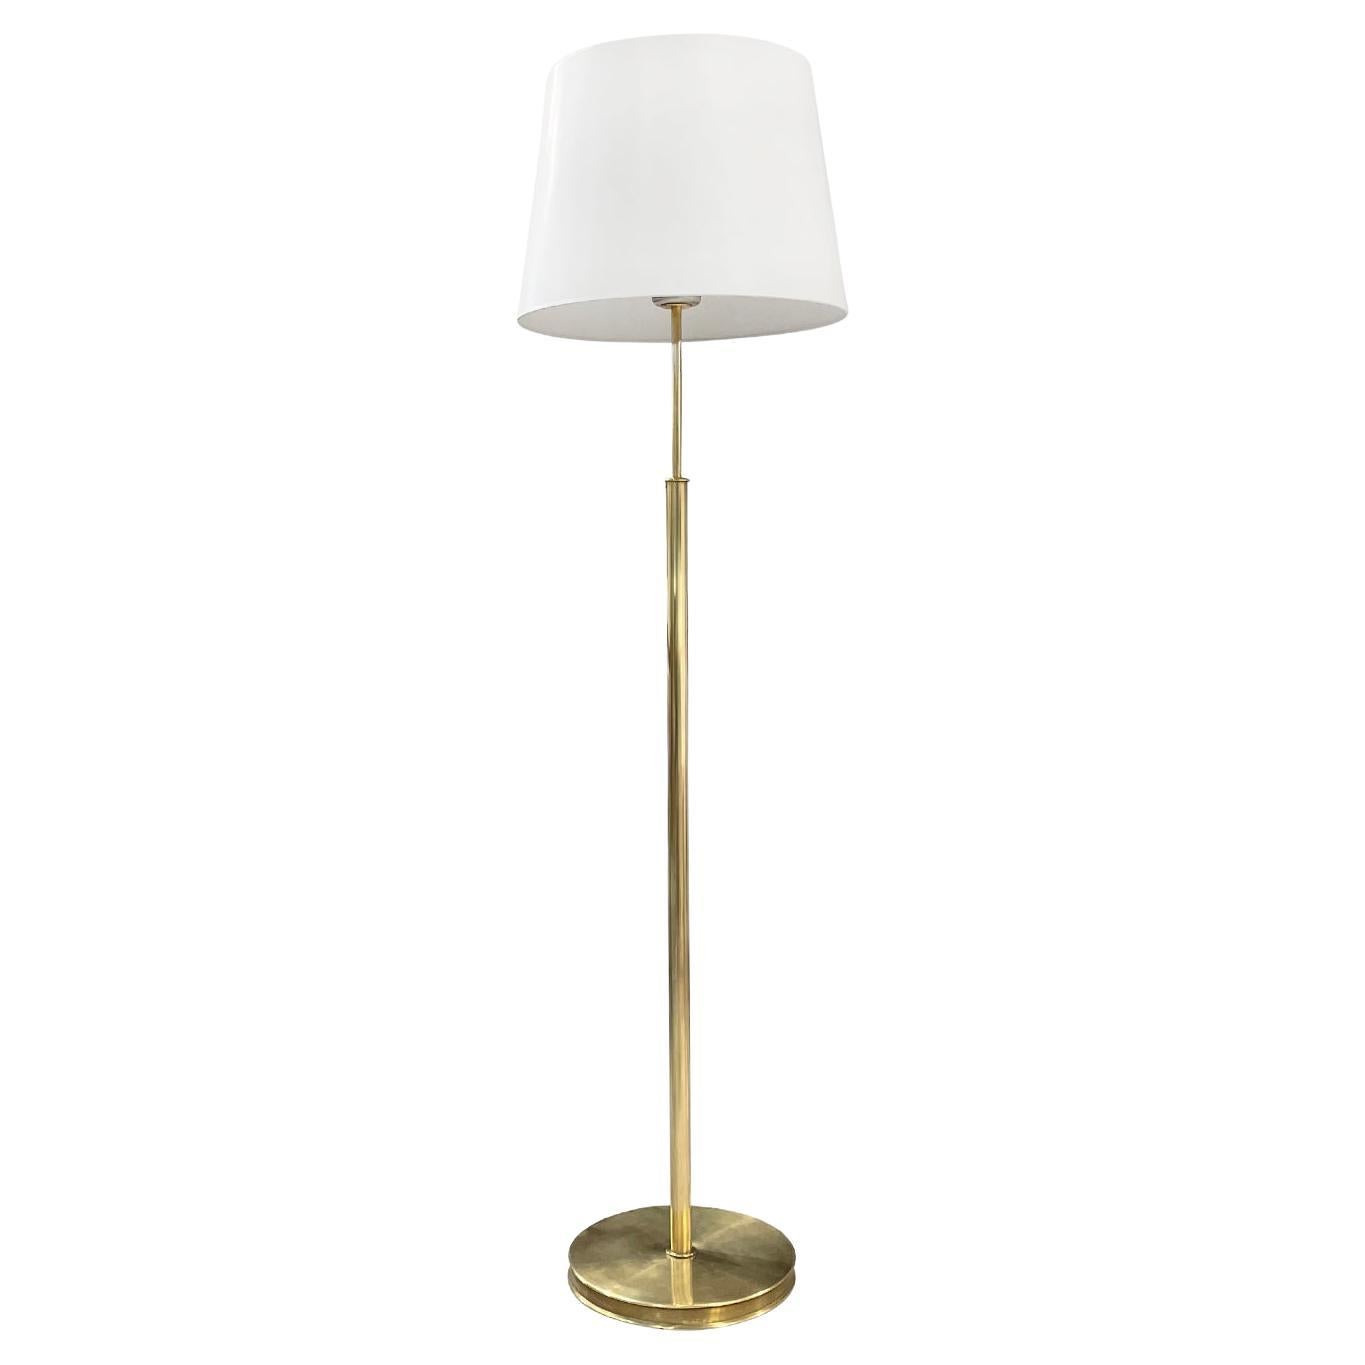 20th Century Swedish Svenskt Tenn Brass Floor Lamp, Vintage Light by Josef Frank For Sale